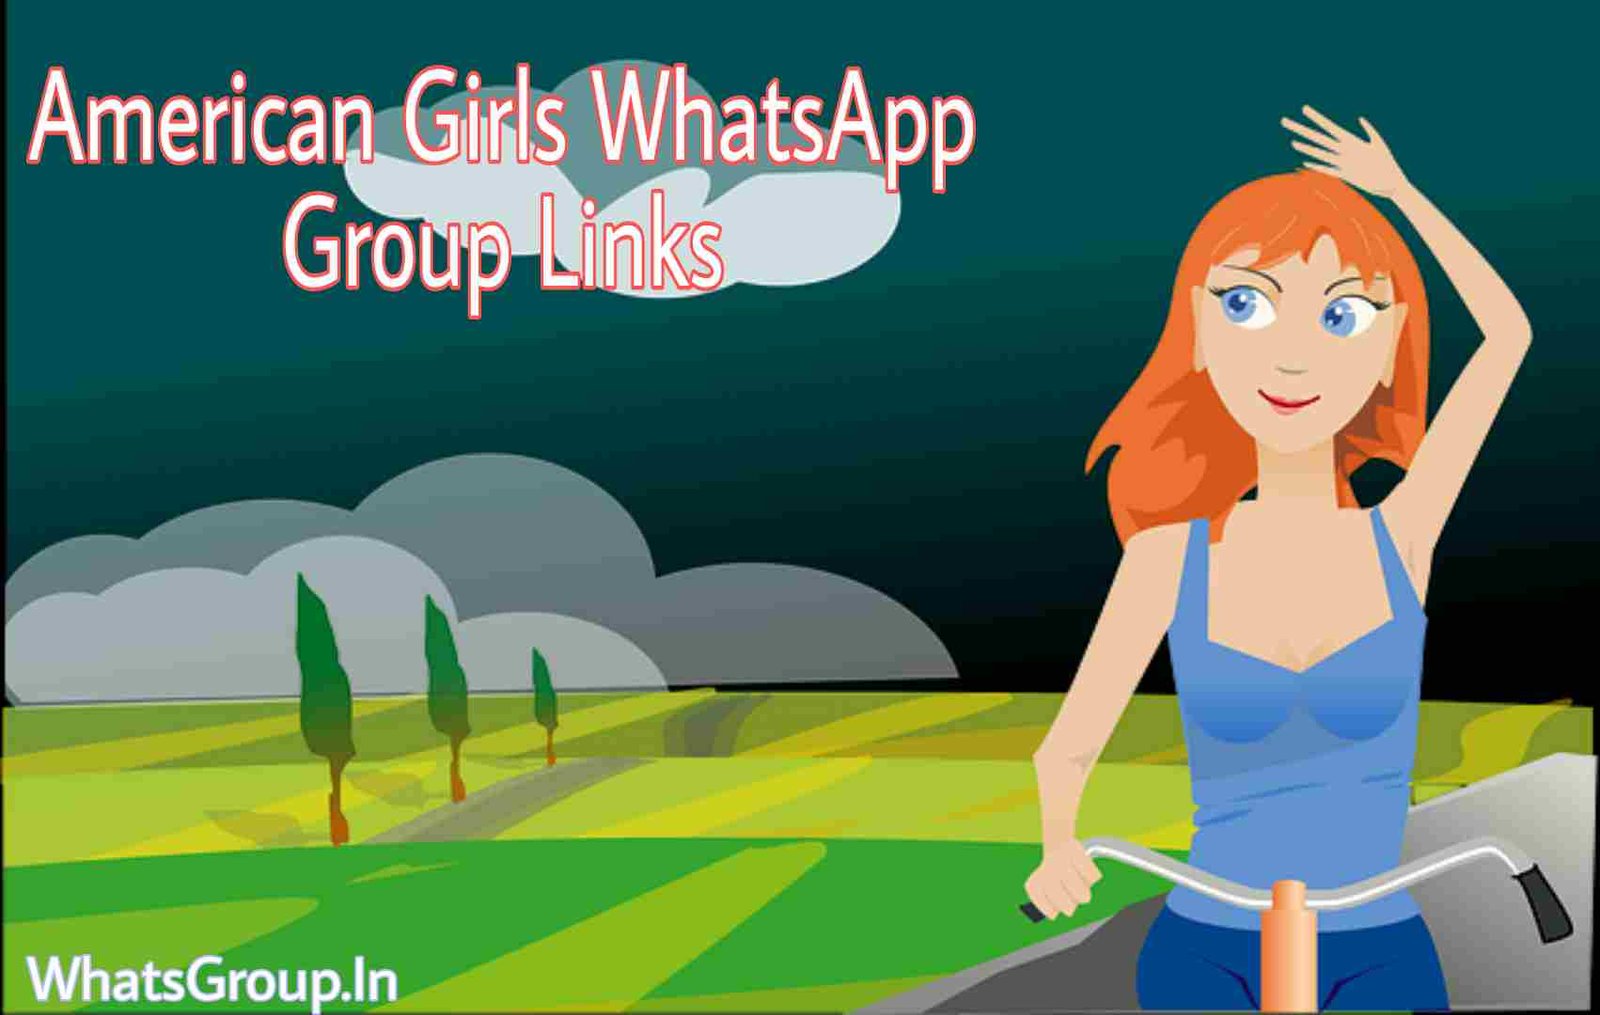 American Girls WhatsApp Group Links